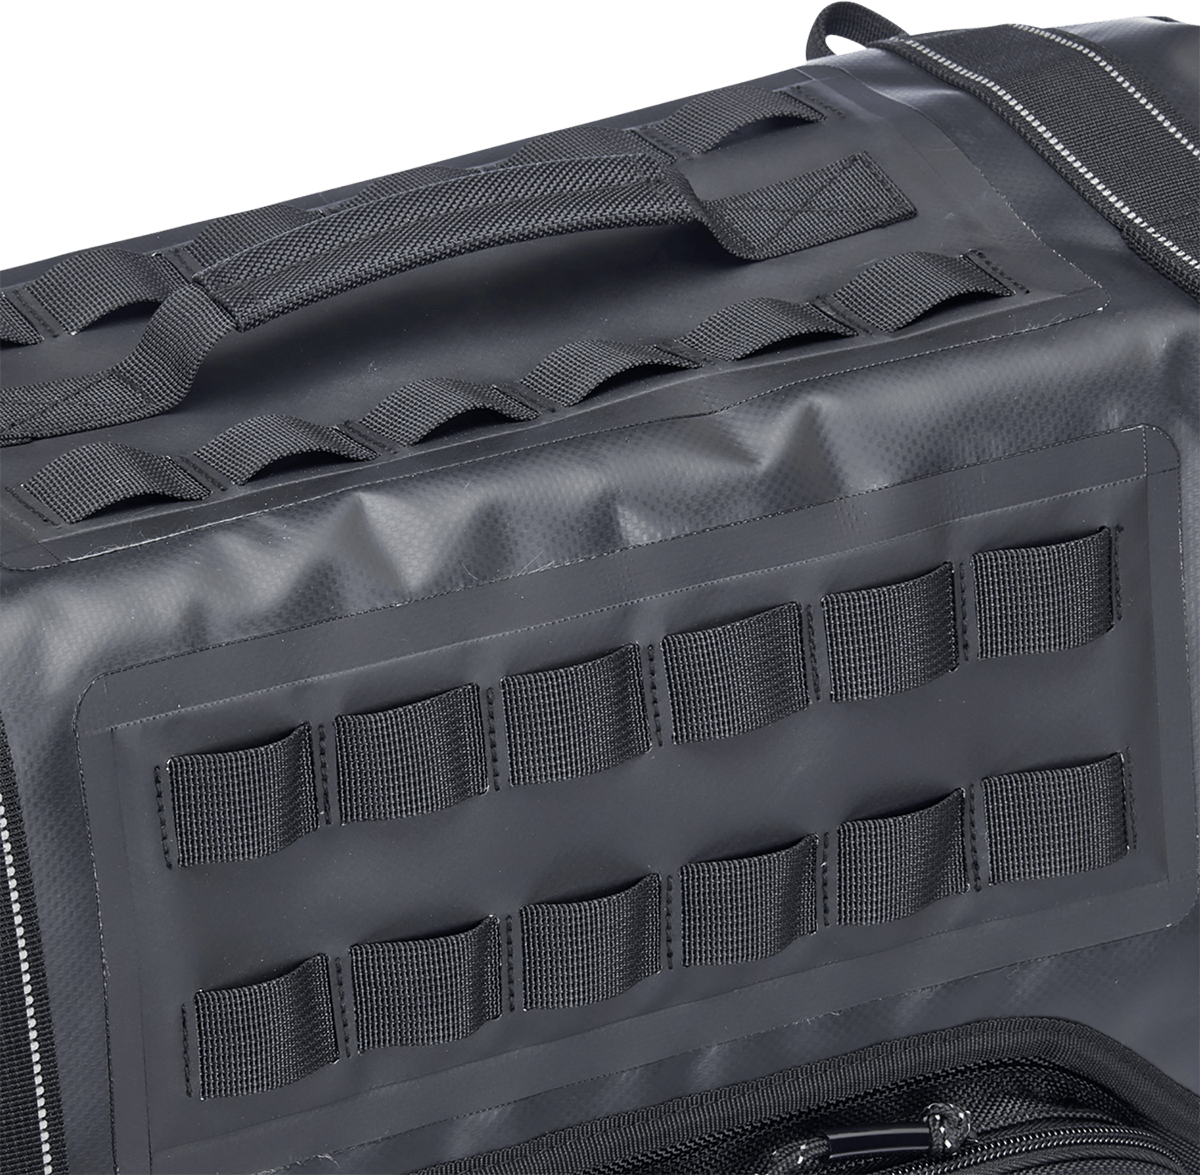 BILTWELL-EXFIL-36 Saddlebags-Saddlebags-MetalCore Harley Supply